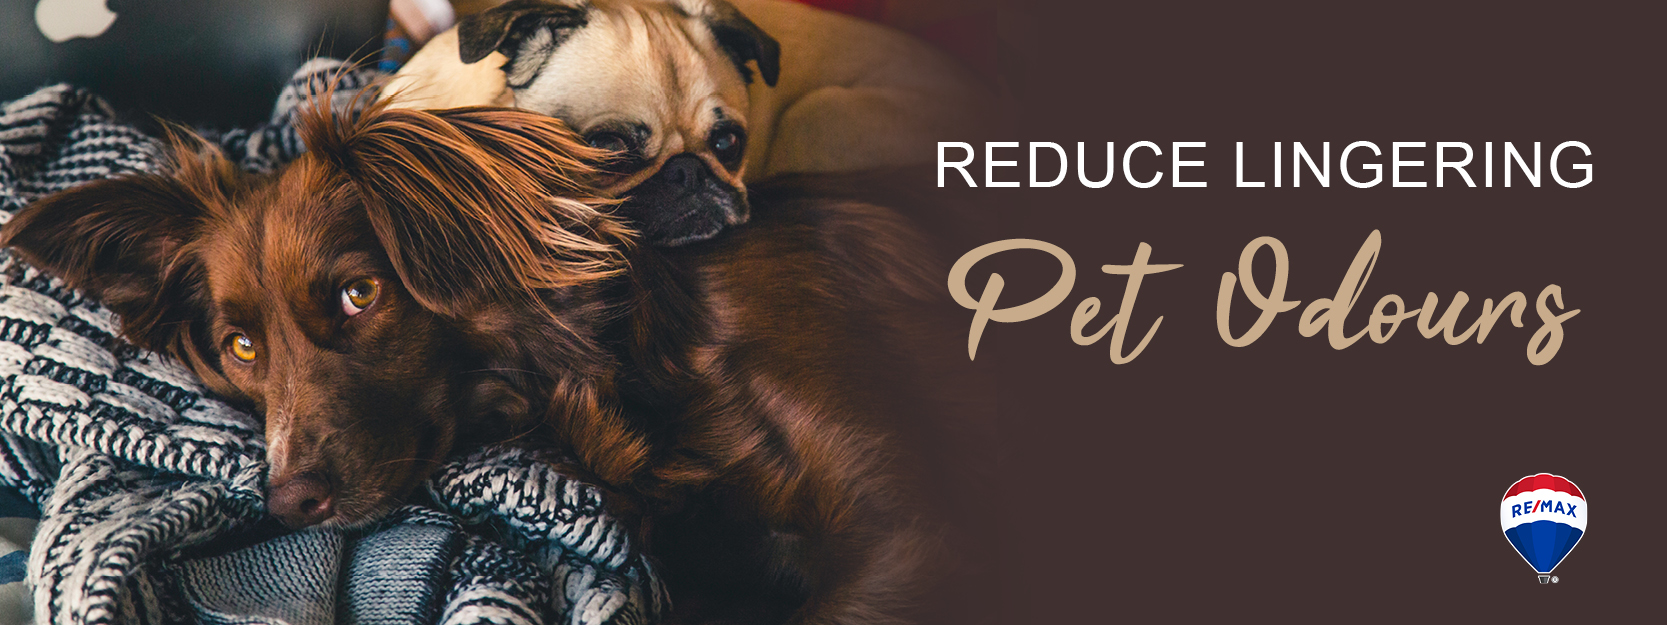 Reduce Lingering Pet Odours